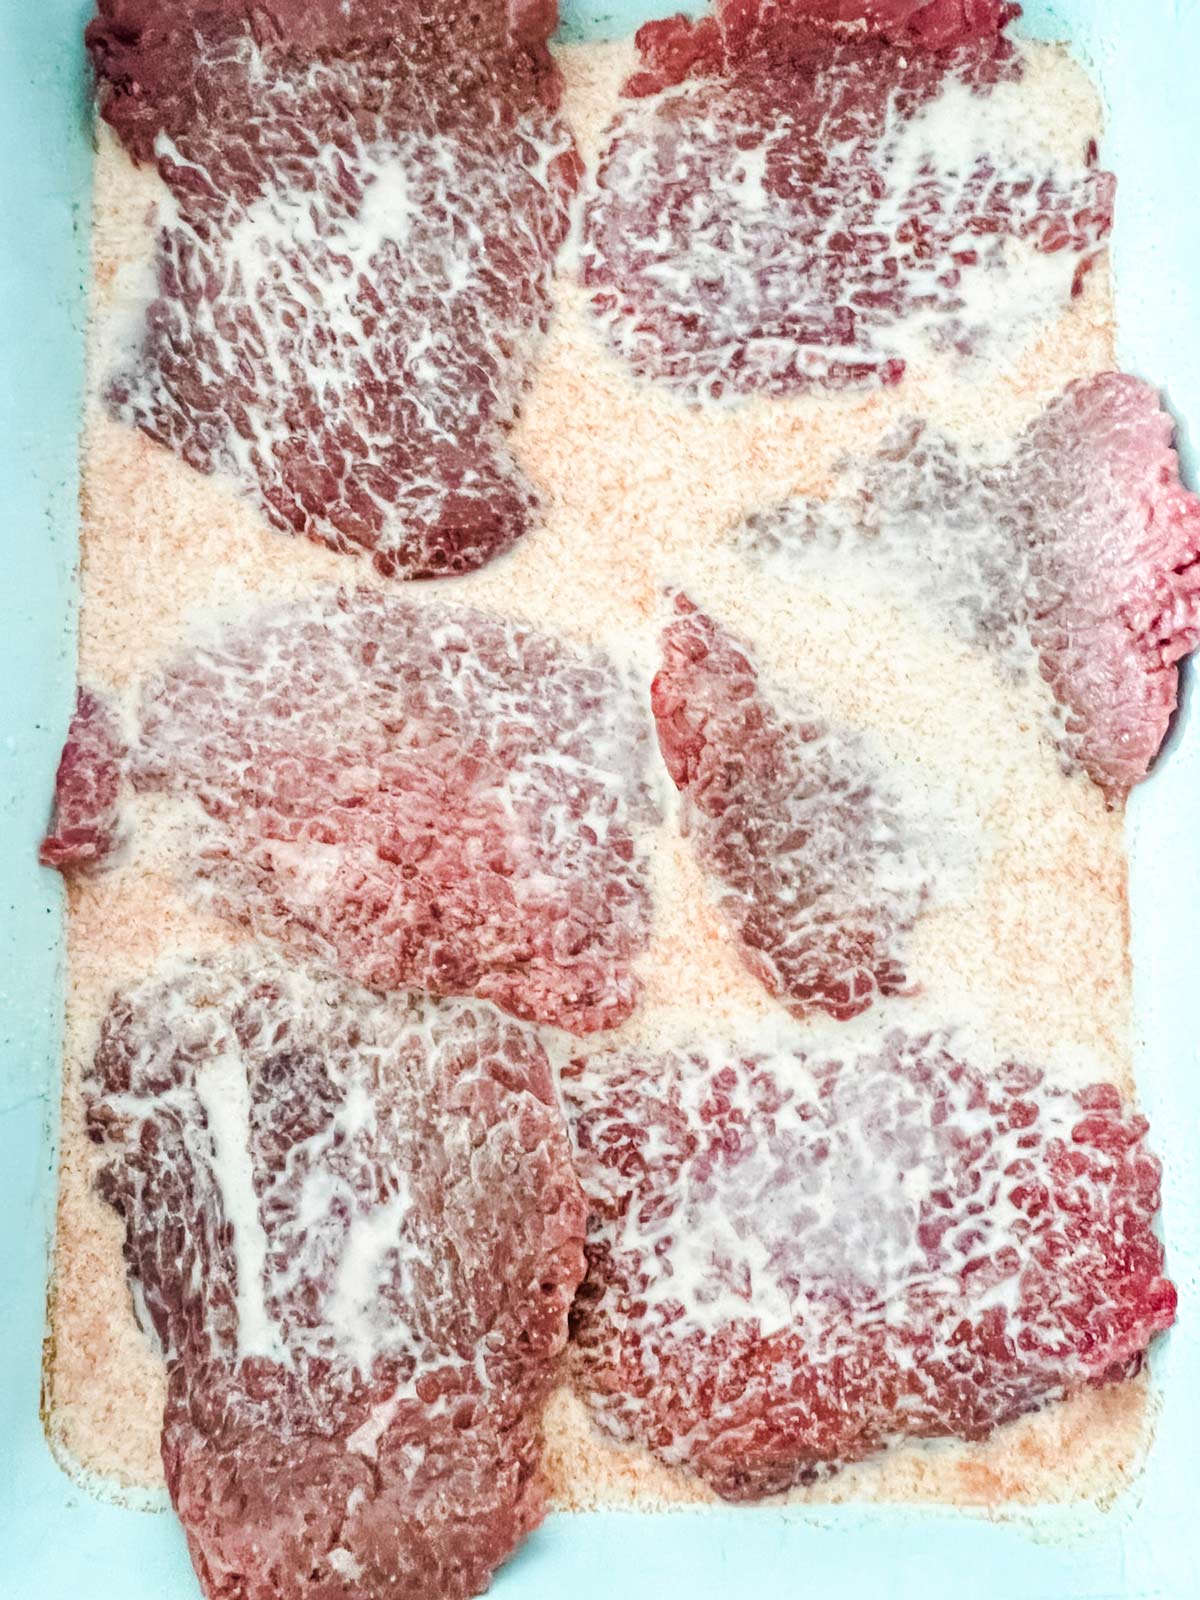 Cube steaks marinating in a mixture of milk, salt, paprika, and garlic powder.